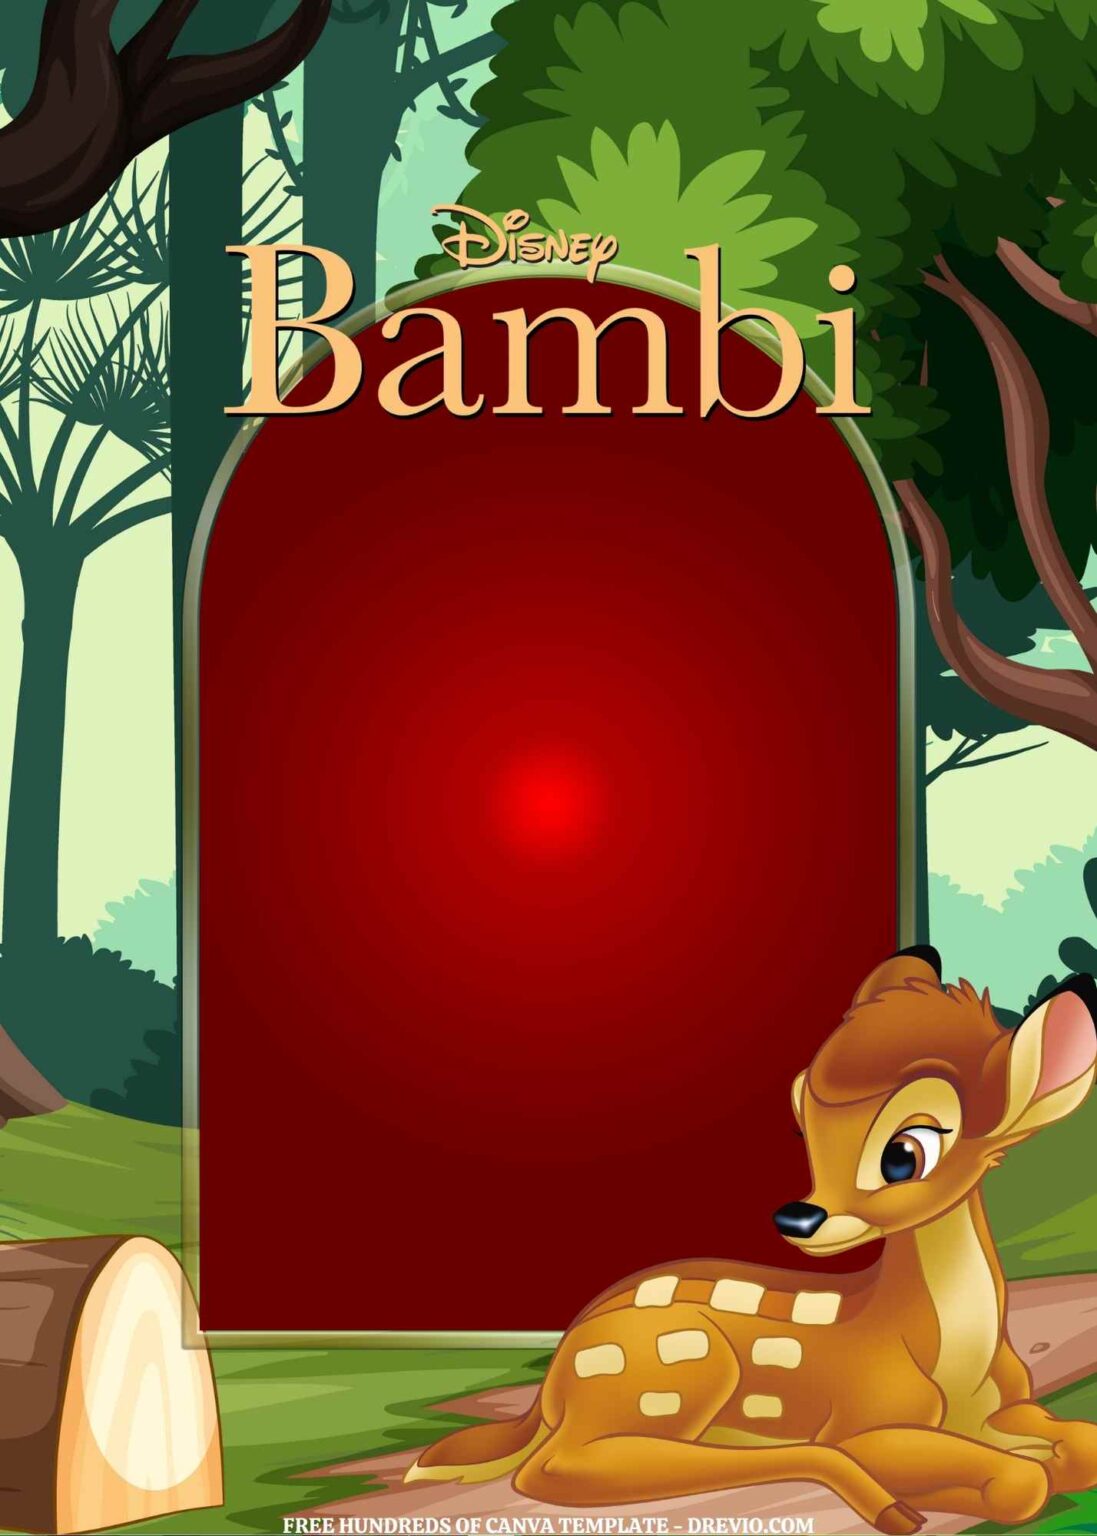 FREE EDITABLE 16 Bambi Canva Templates Download Hundreds FREE